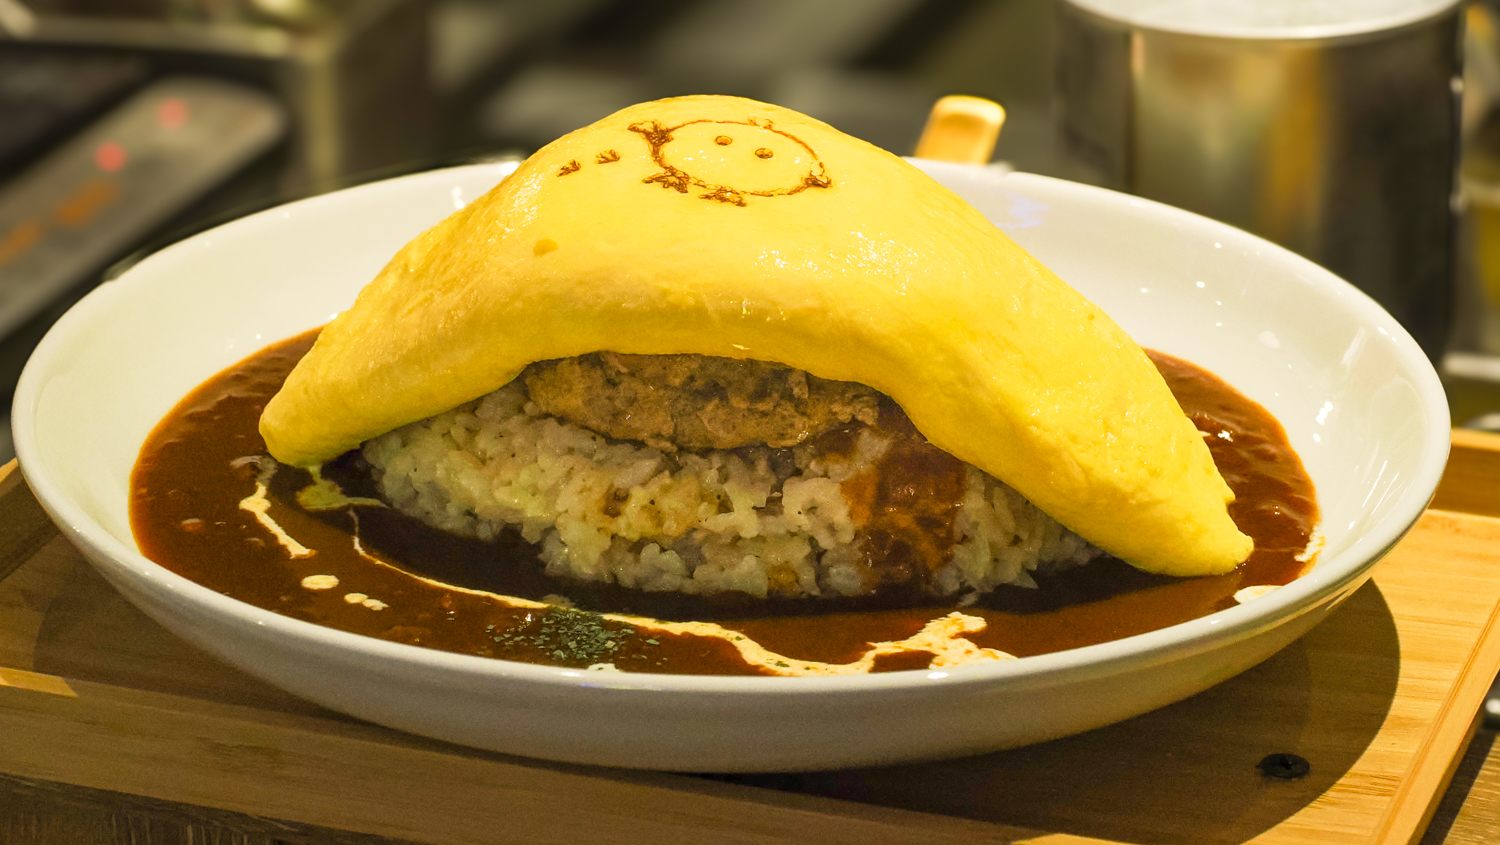 Omelette with hamburger and rice "Omuburg"